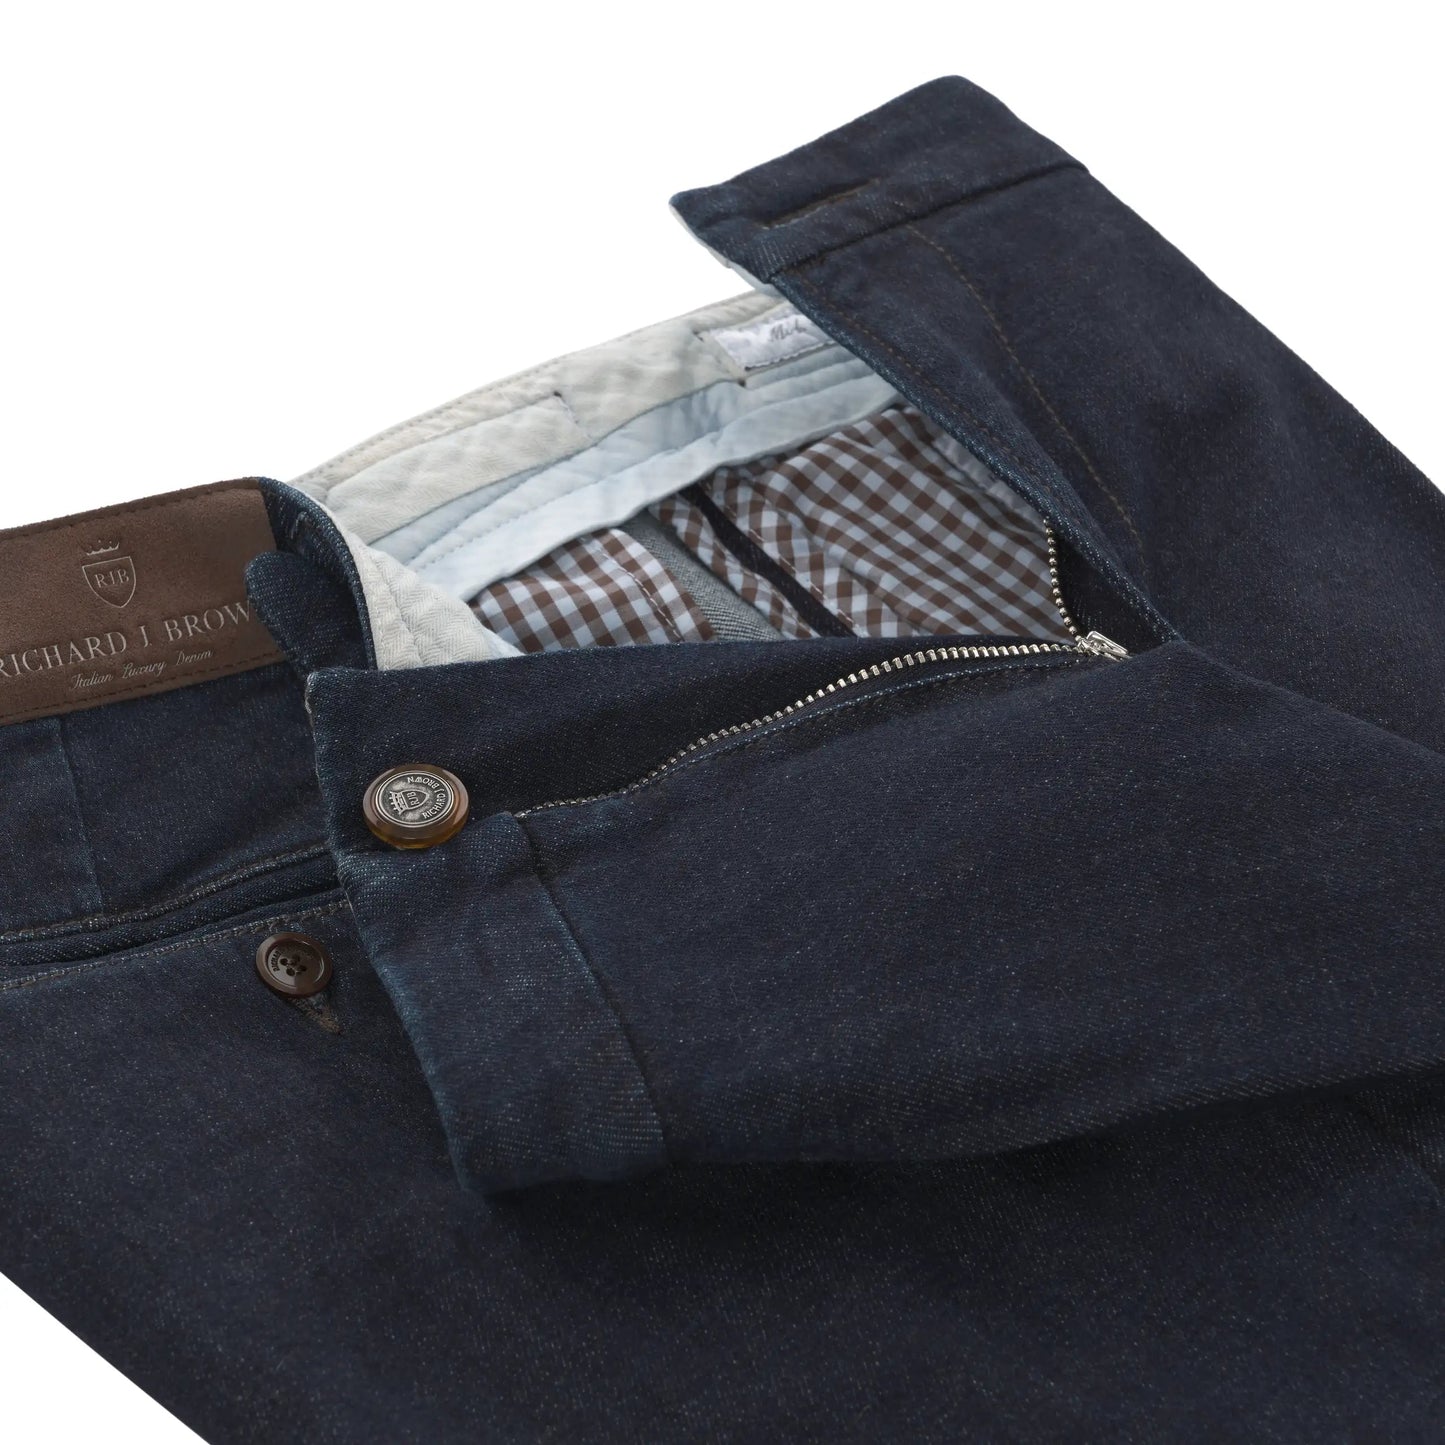 Richard J. Brown Slim - Fit Cotton - Blend Denim Trousers with Buckle Adjusters - SARTALE